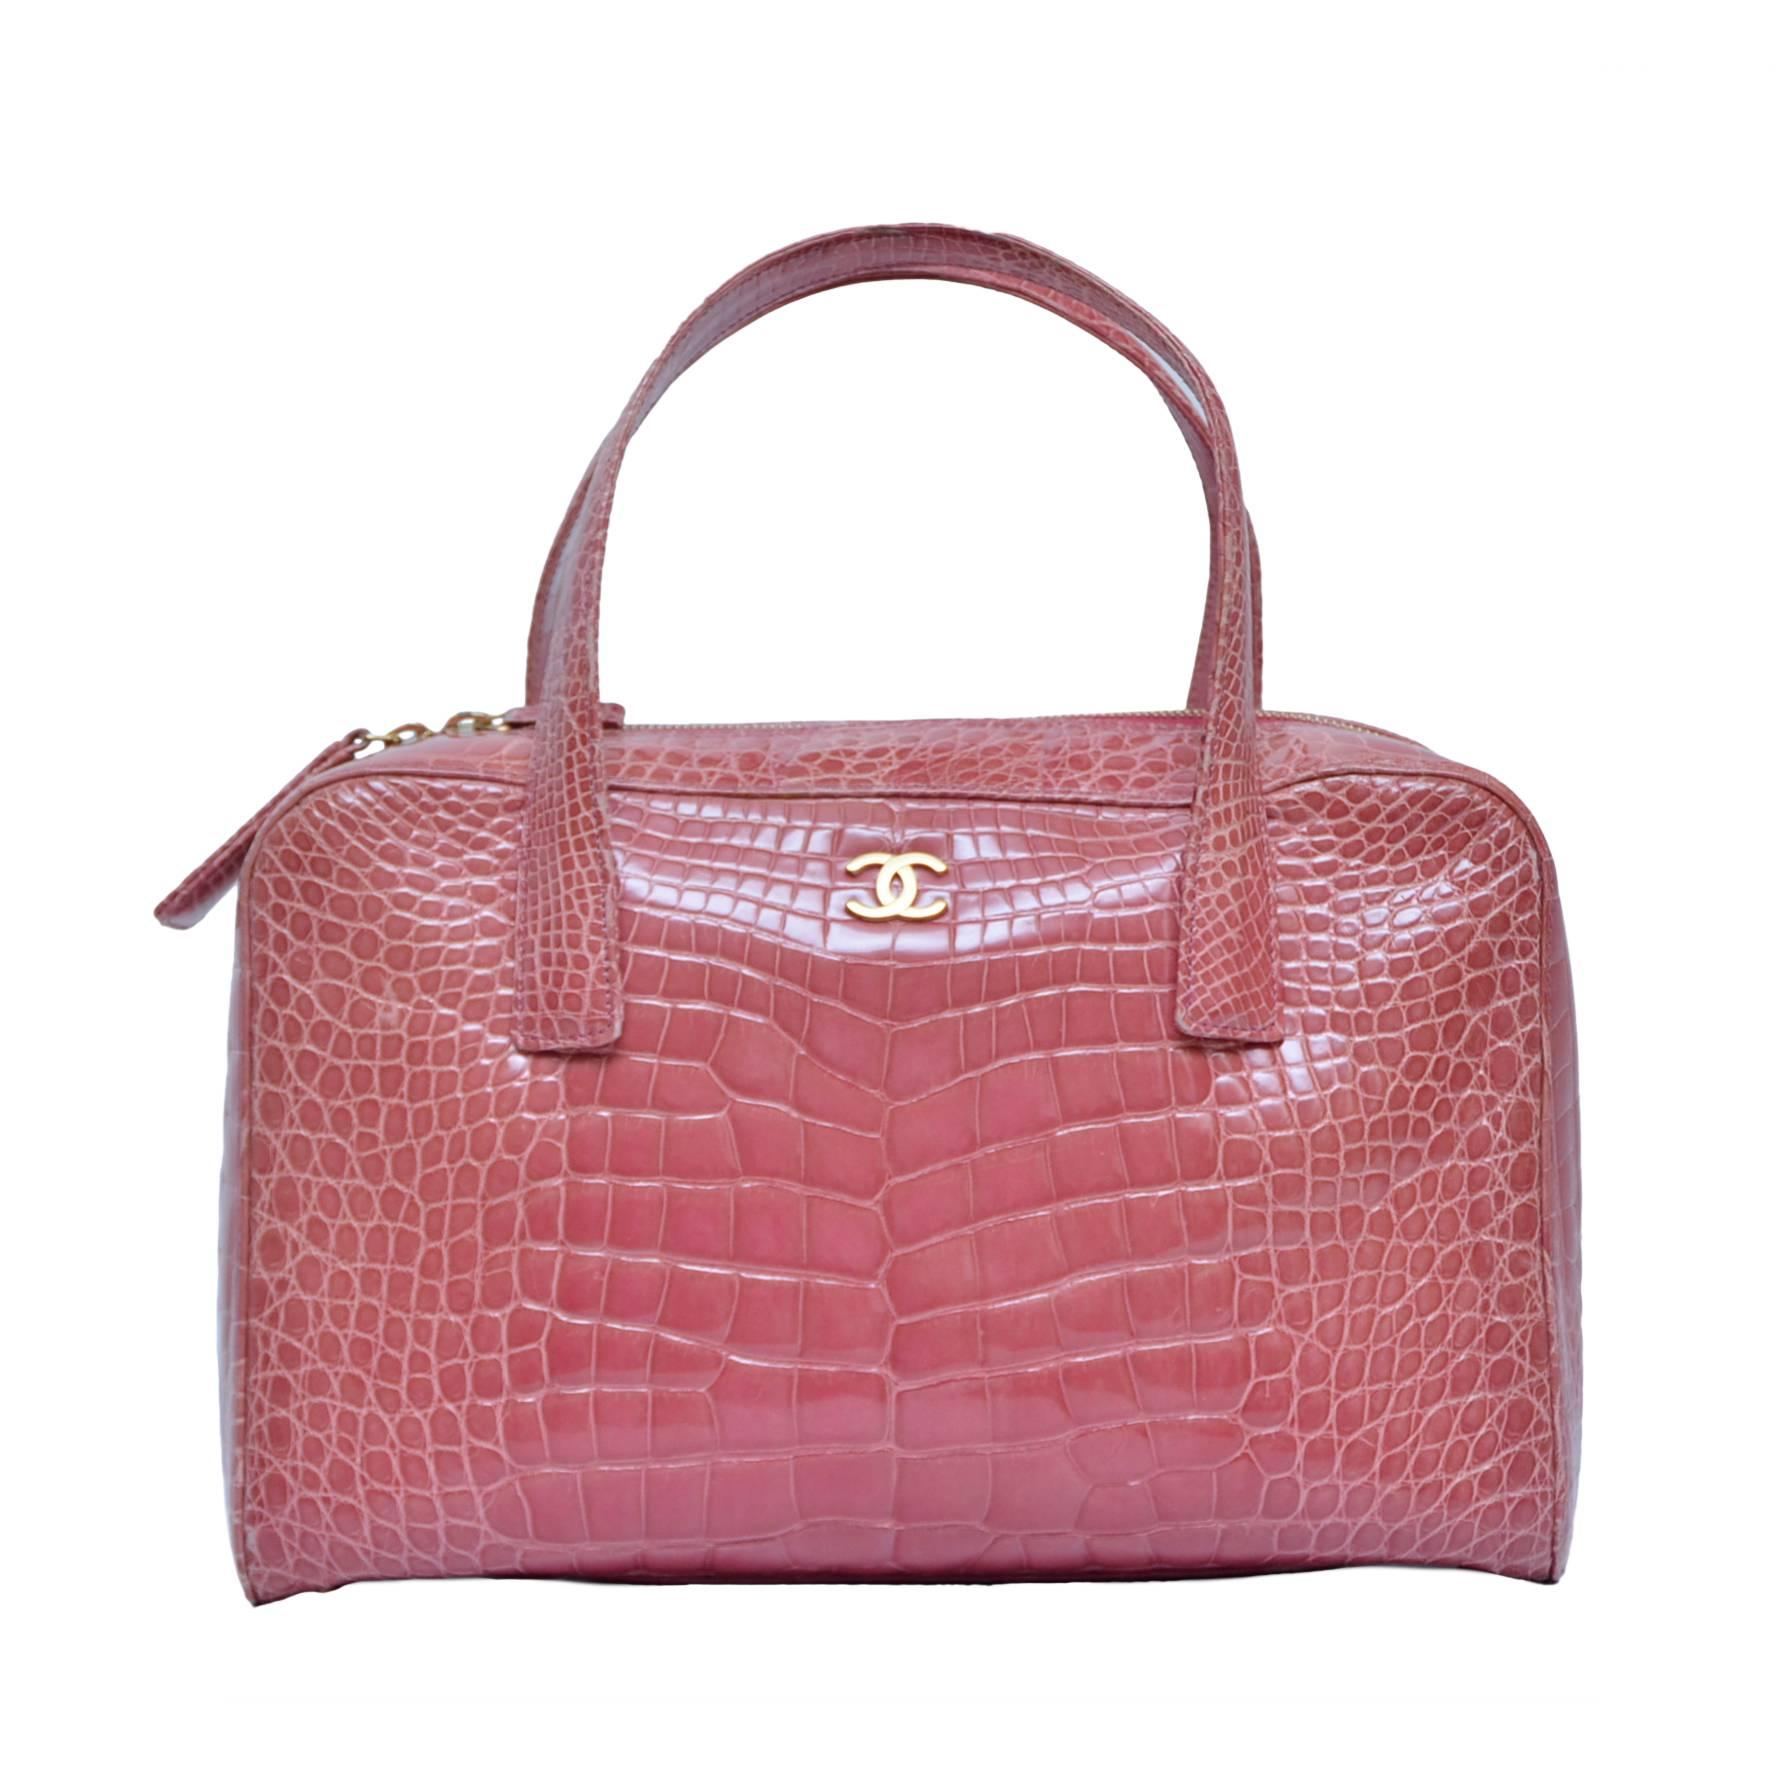 CHANEL Powder Pink Crocodile Handbag 